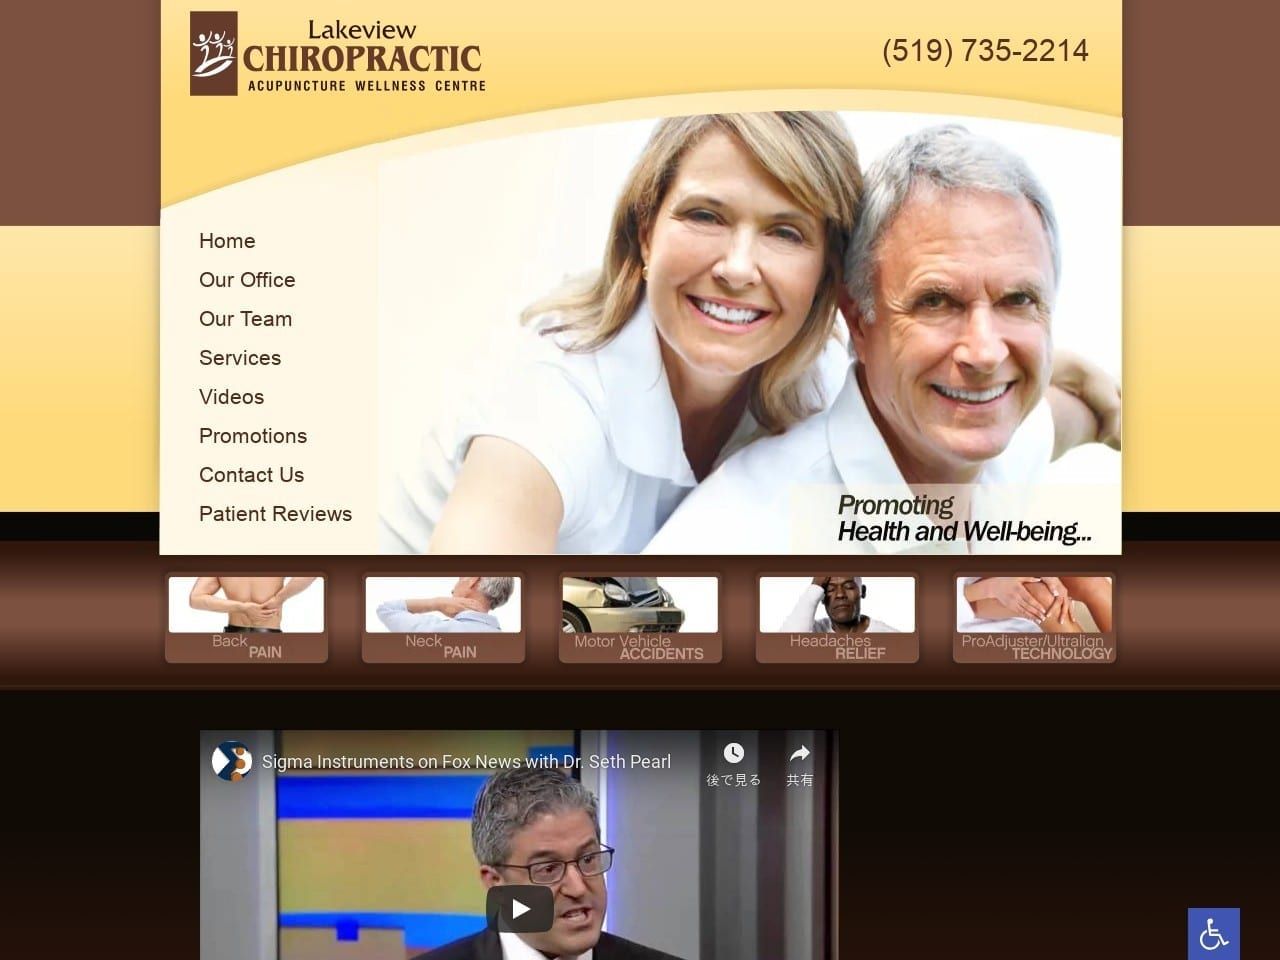 Lakeview Chiropractic Website Screenshot From Url Drdrazic.com